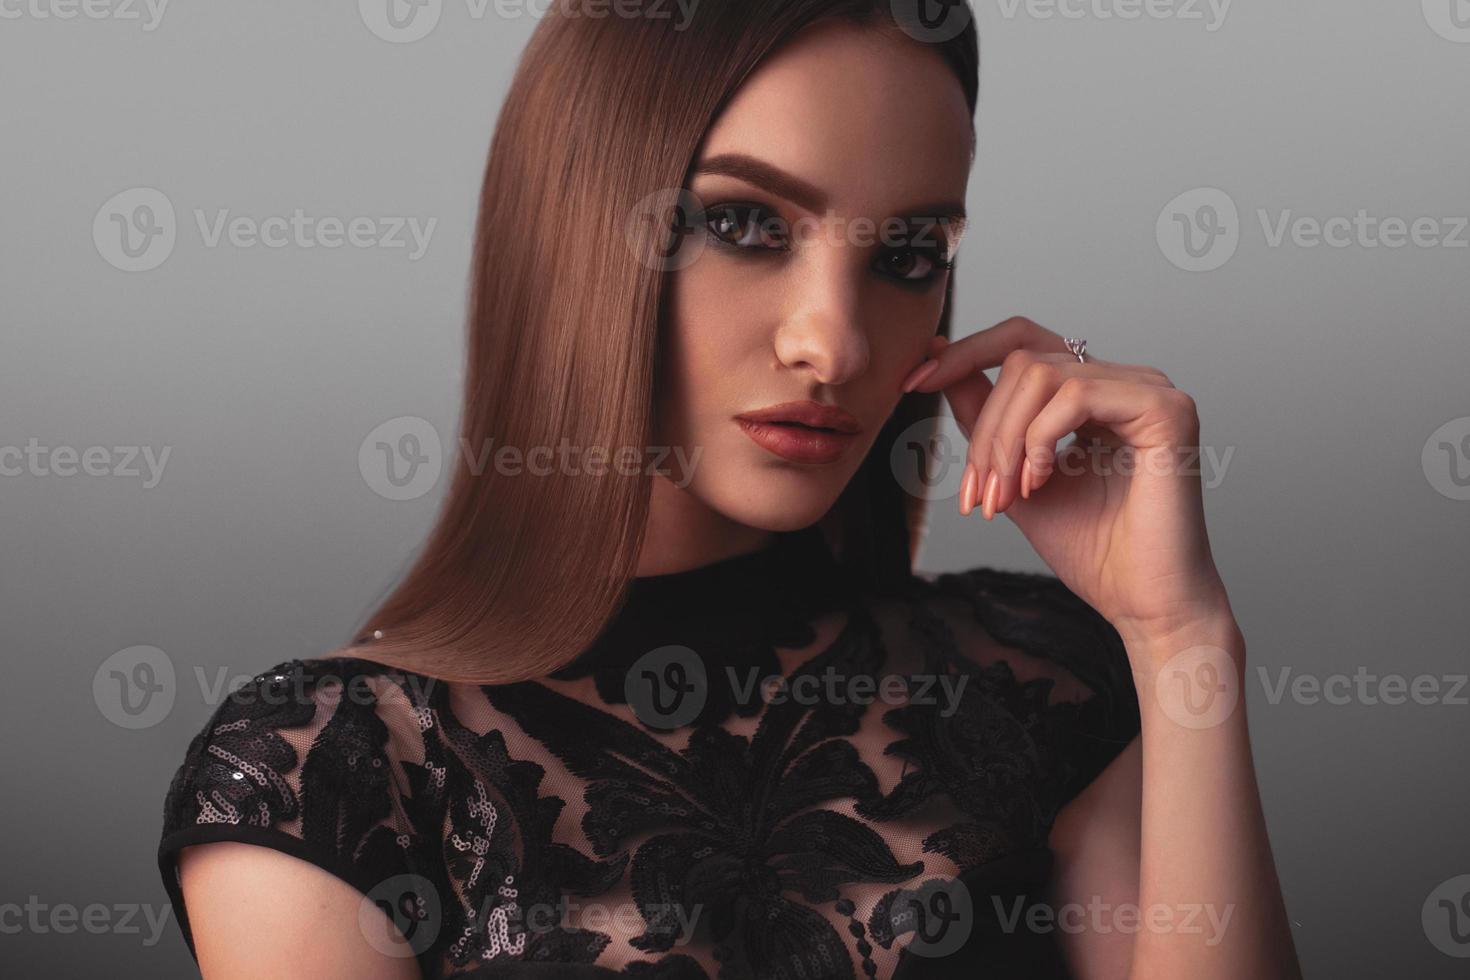 sexig ung lady i svart klänning i studio foto